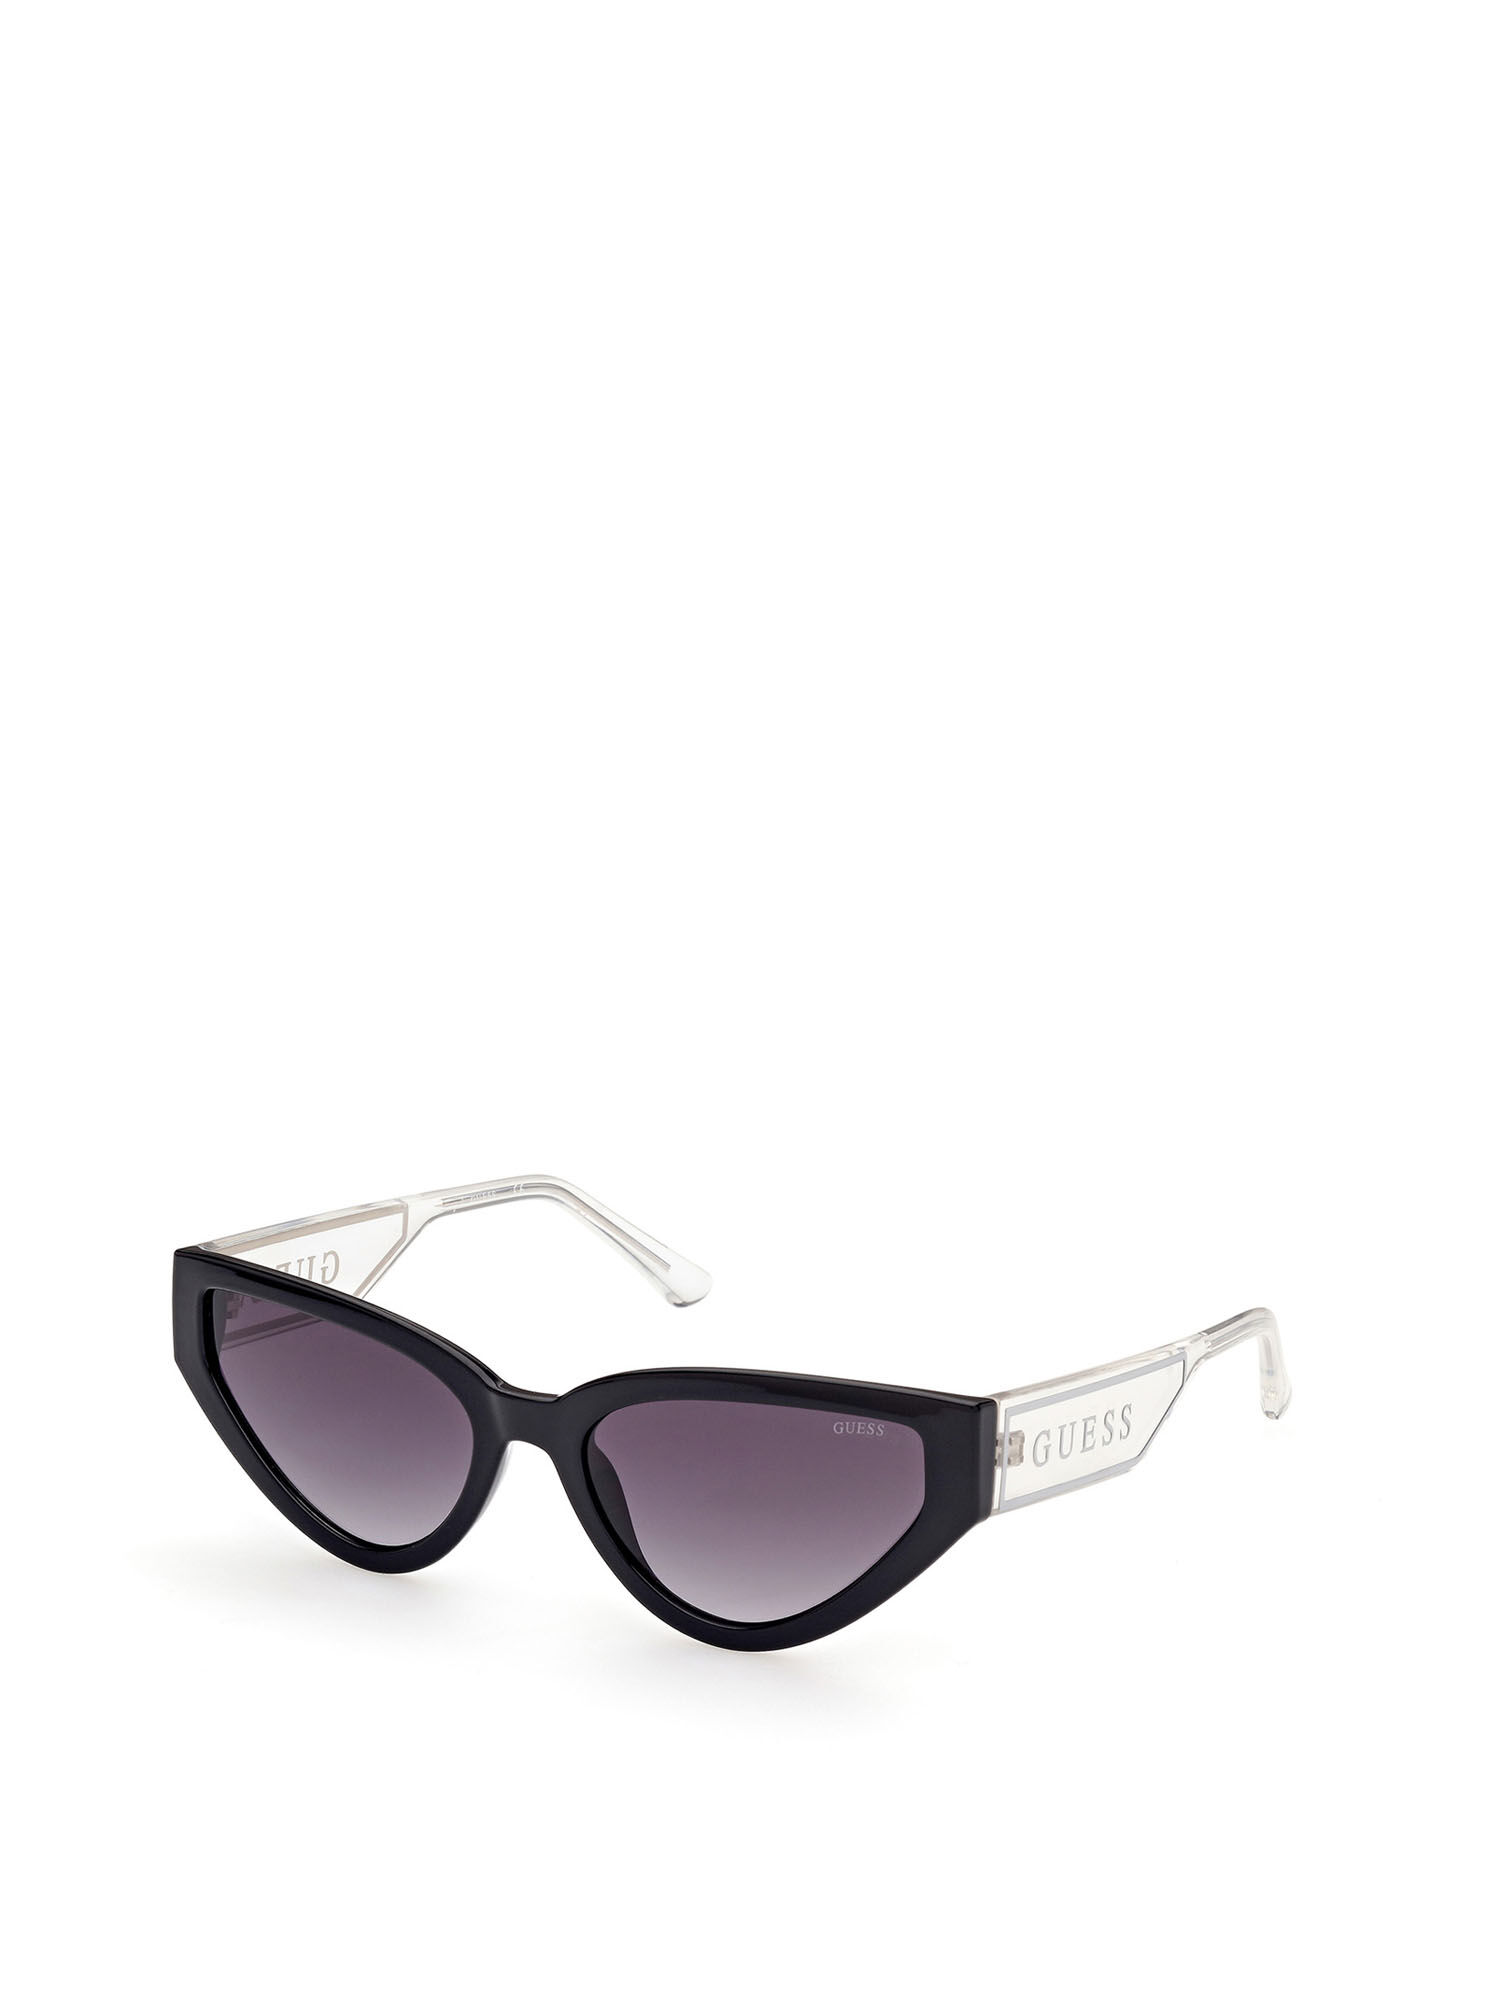 Guess GU7845 Square Sunglasses | Fashion Eyewear